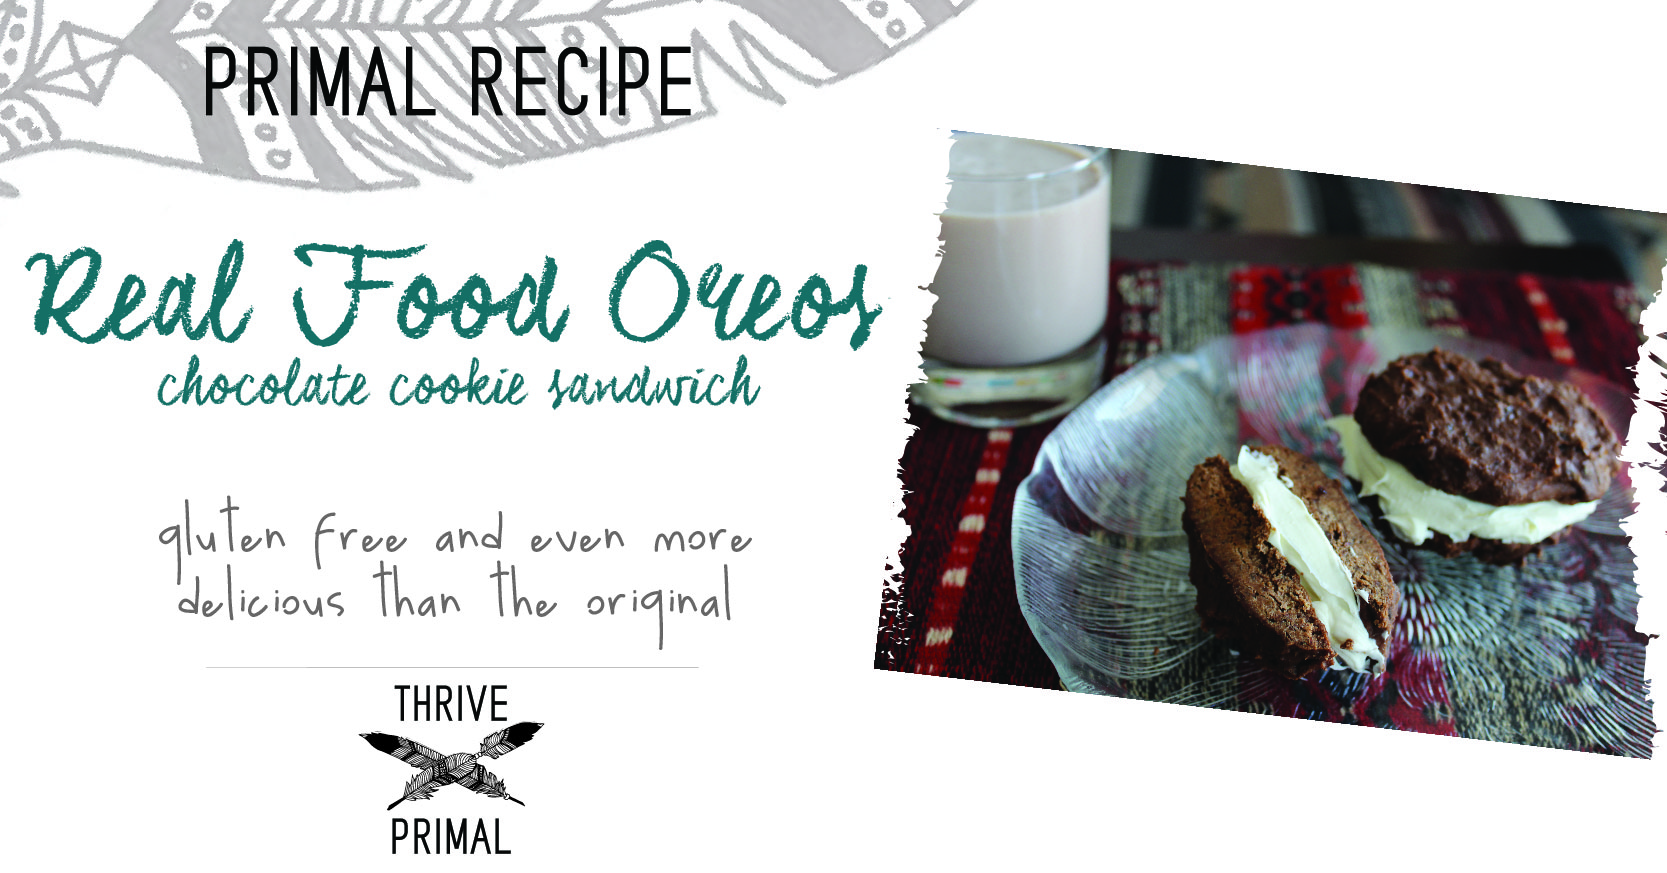 Thrive Primal - real food oreo recipe